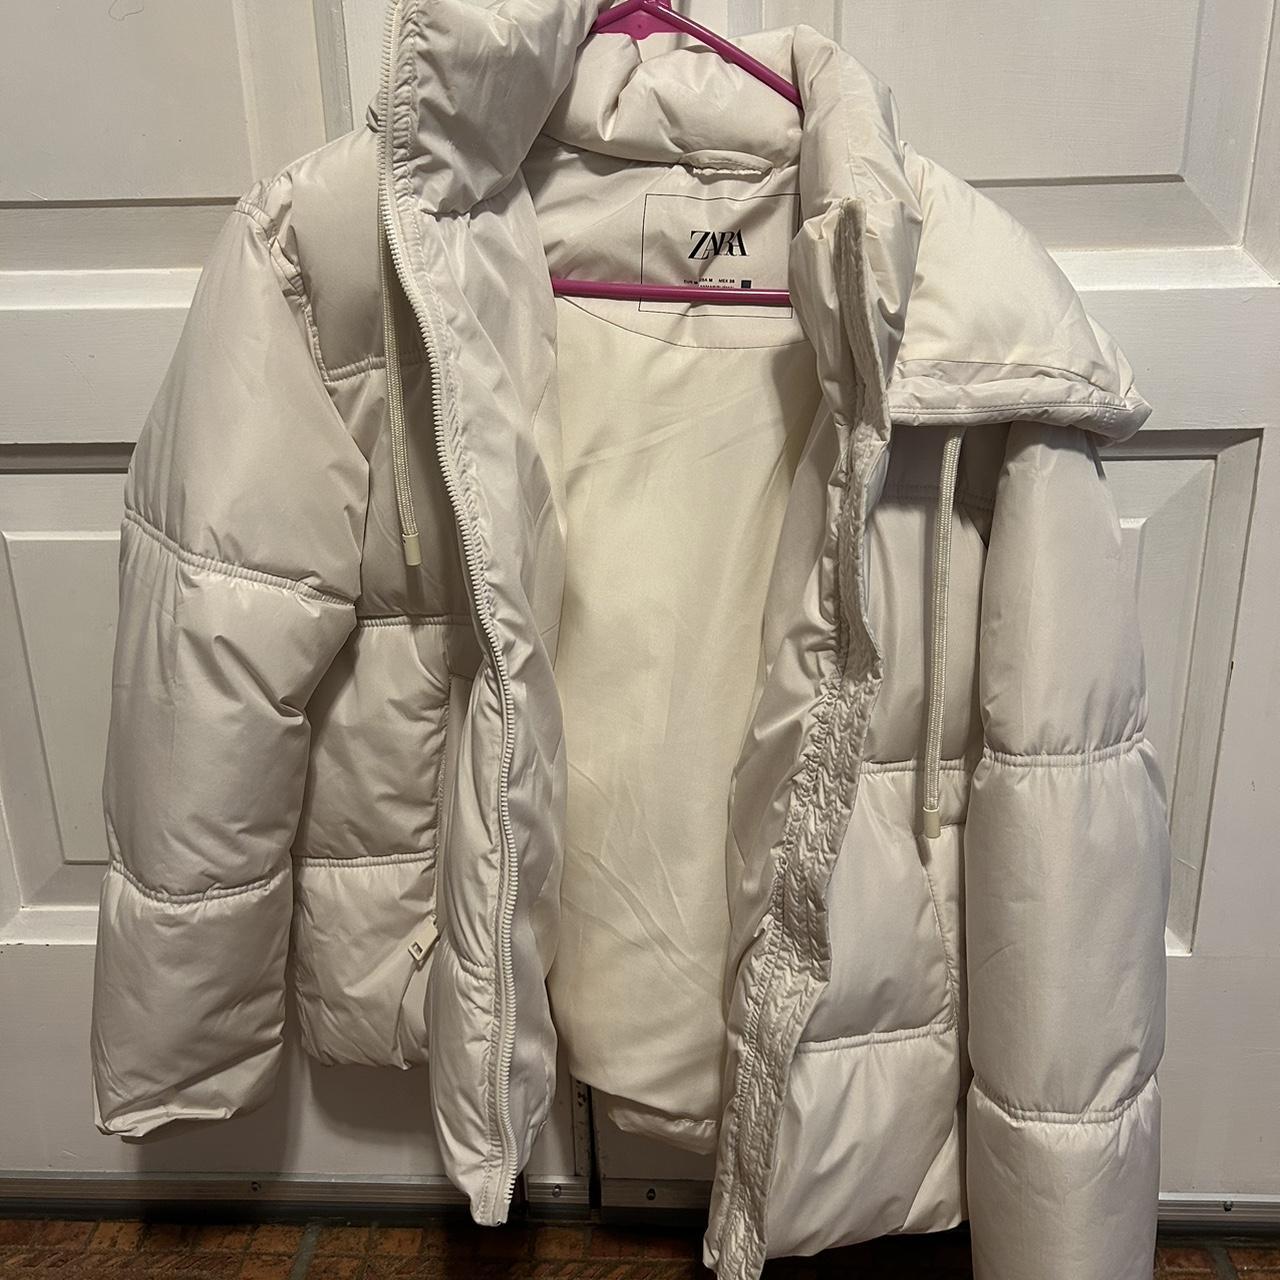 Zara puffer jacket size medium (true to size) I’ve... - Depop